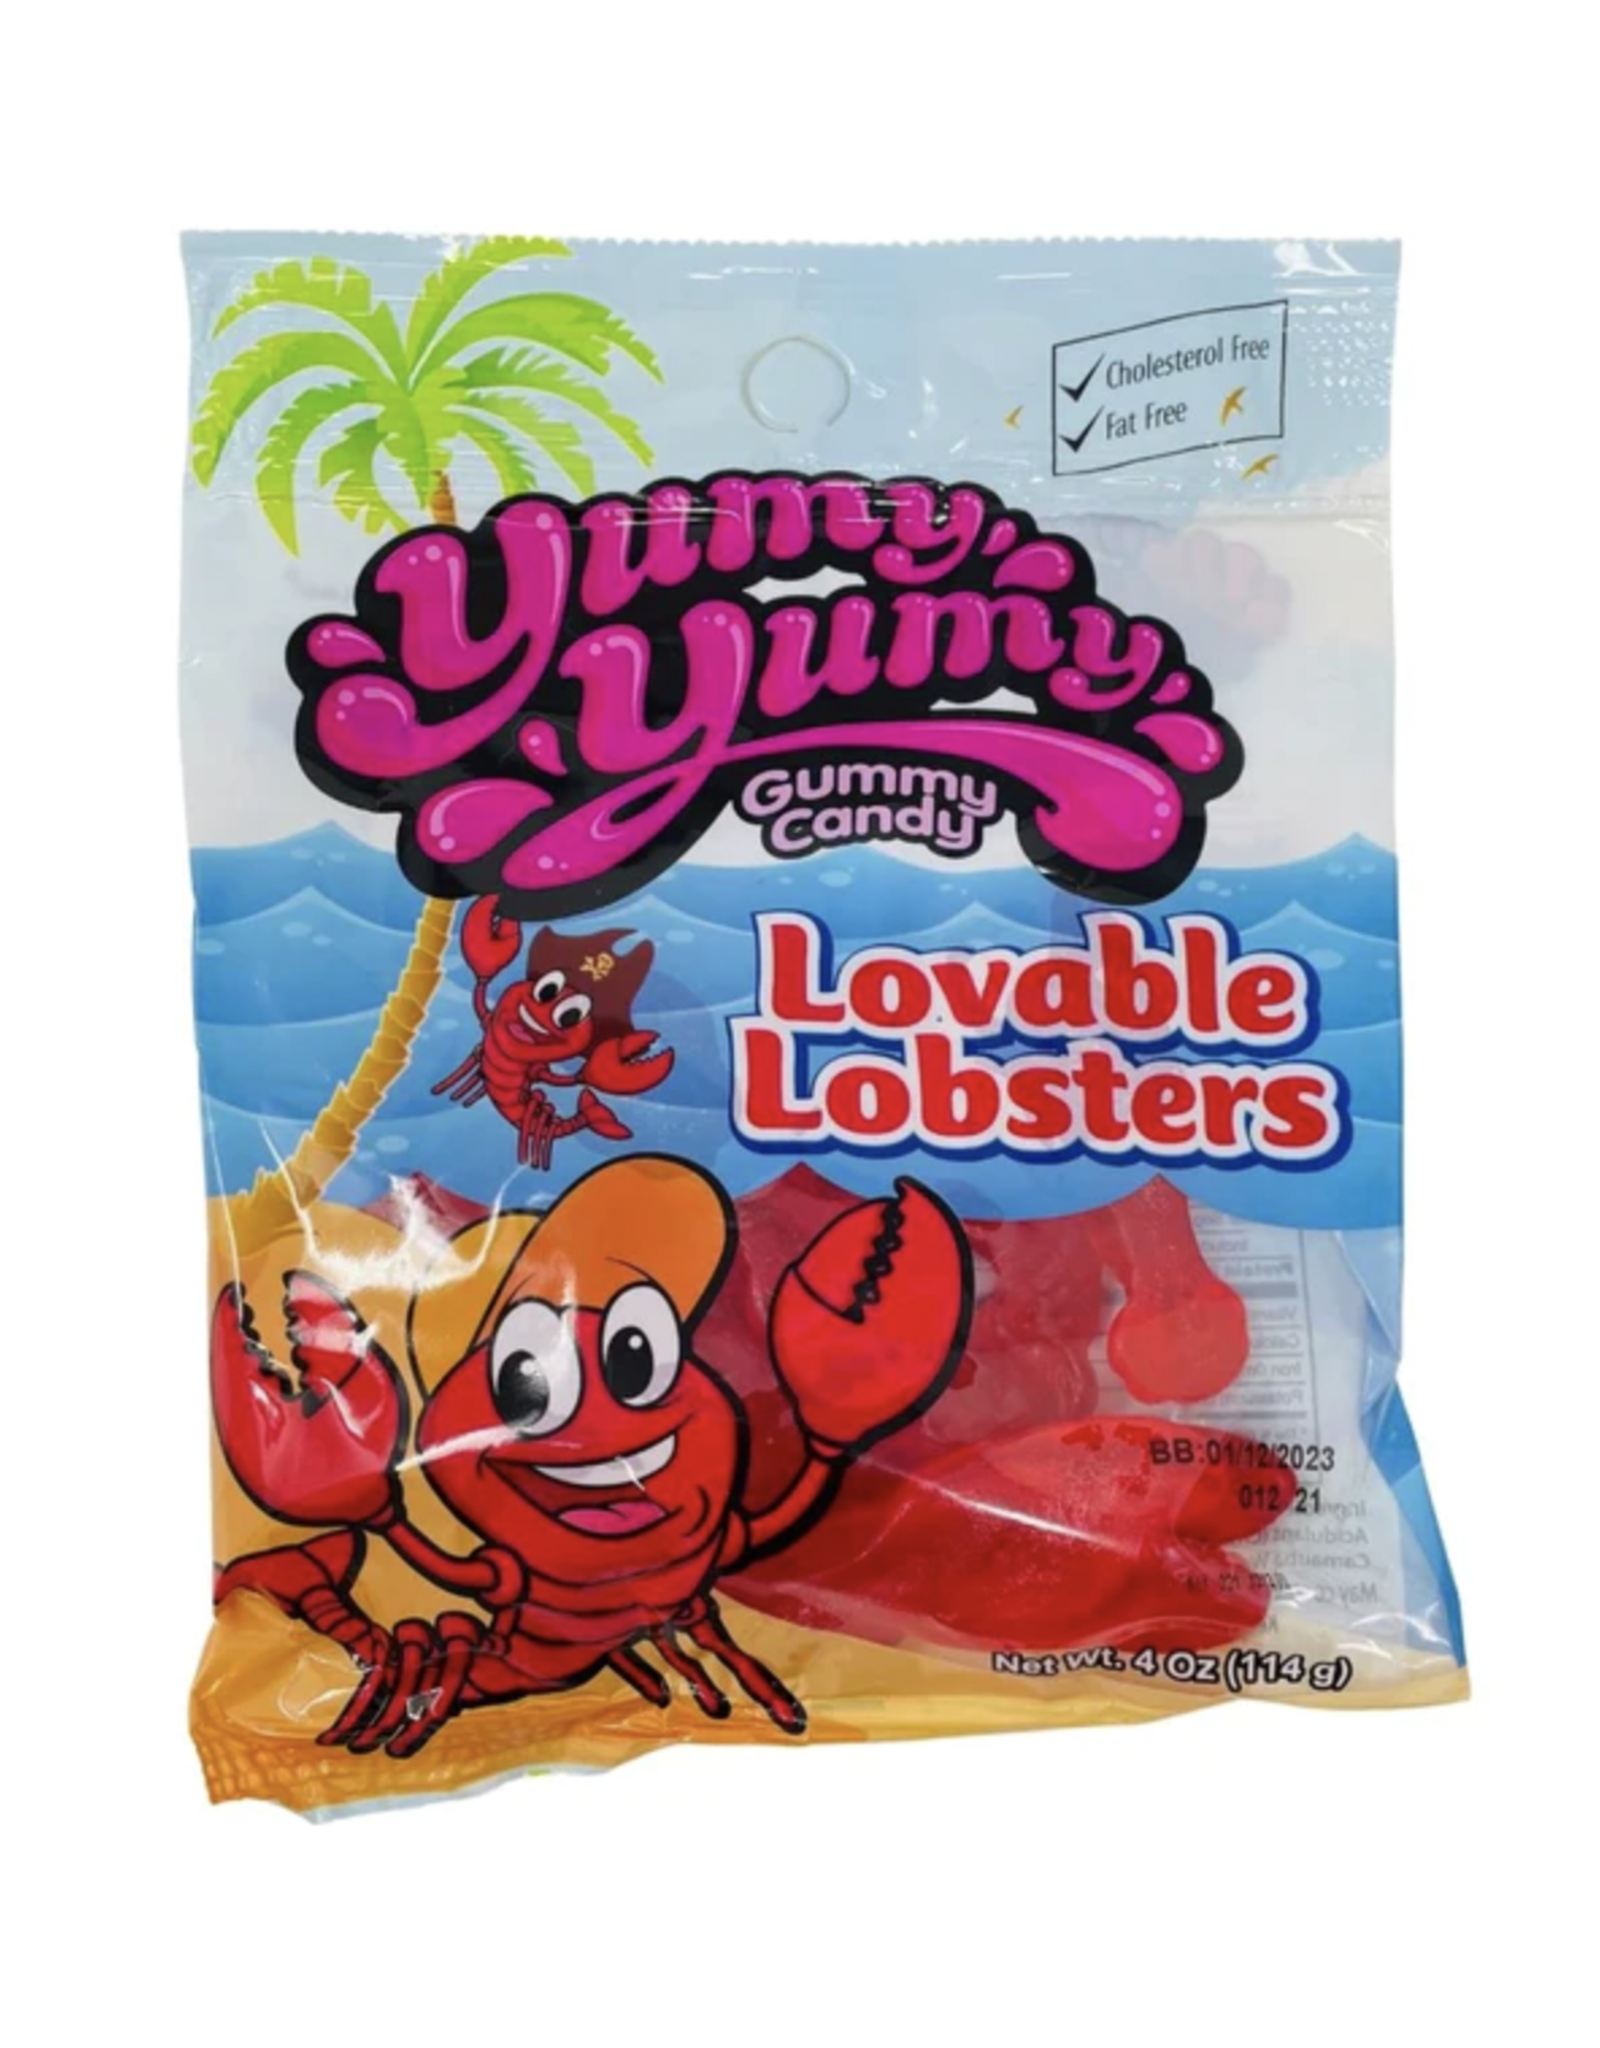 Yumy Yumy Lovable Lobster Bag (Halal)